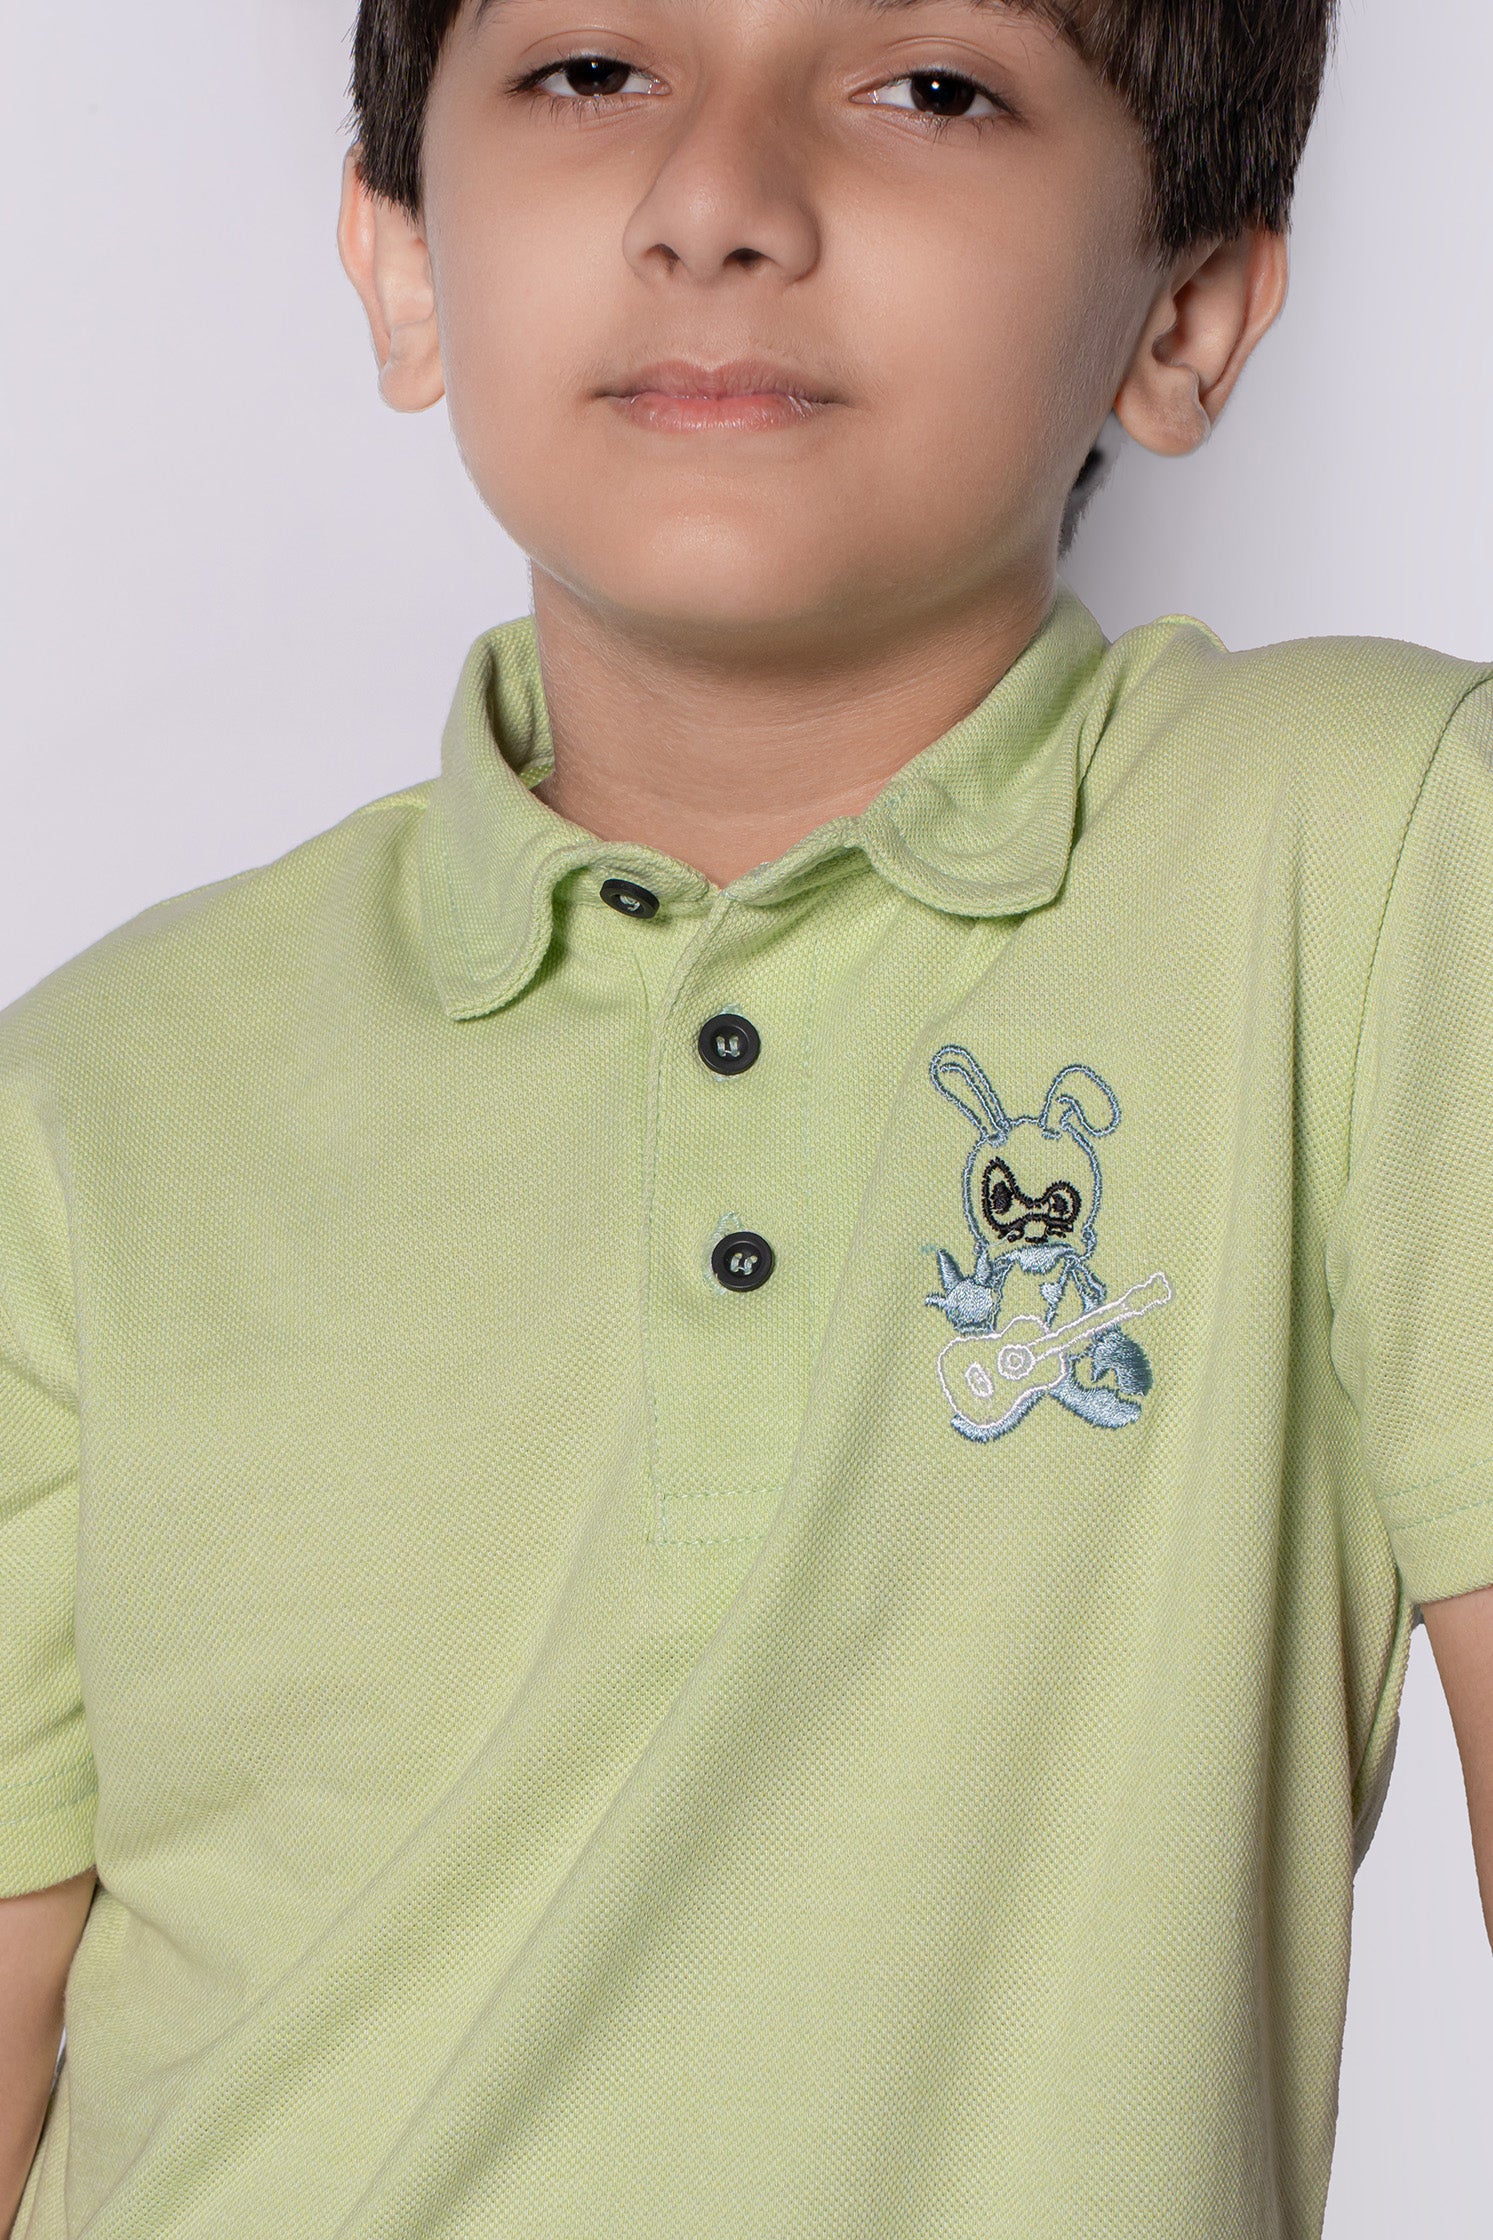 Boy’s embroidery polo shirt